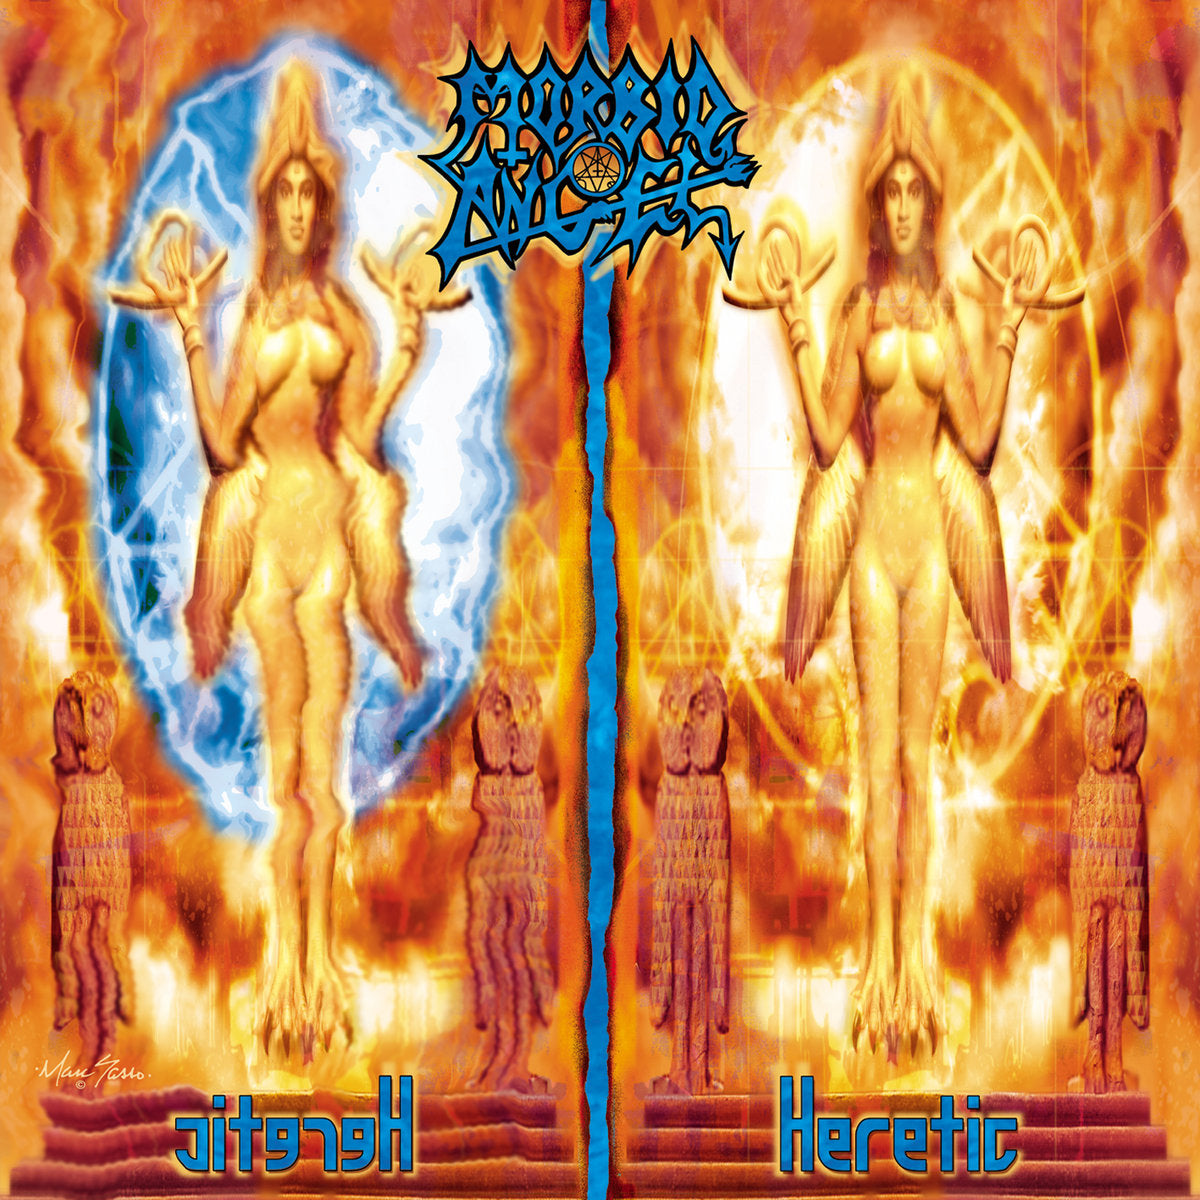 Morbid Angel "Heretic" CD